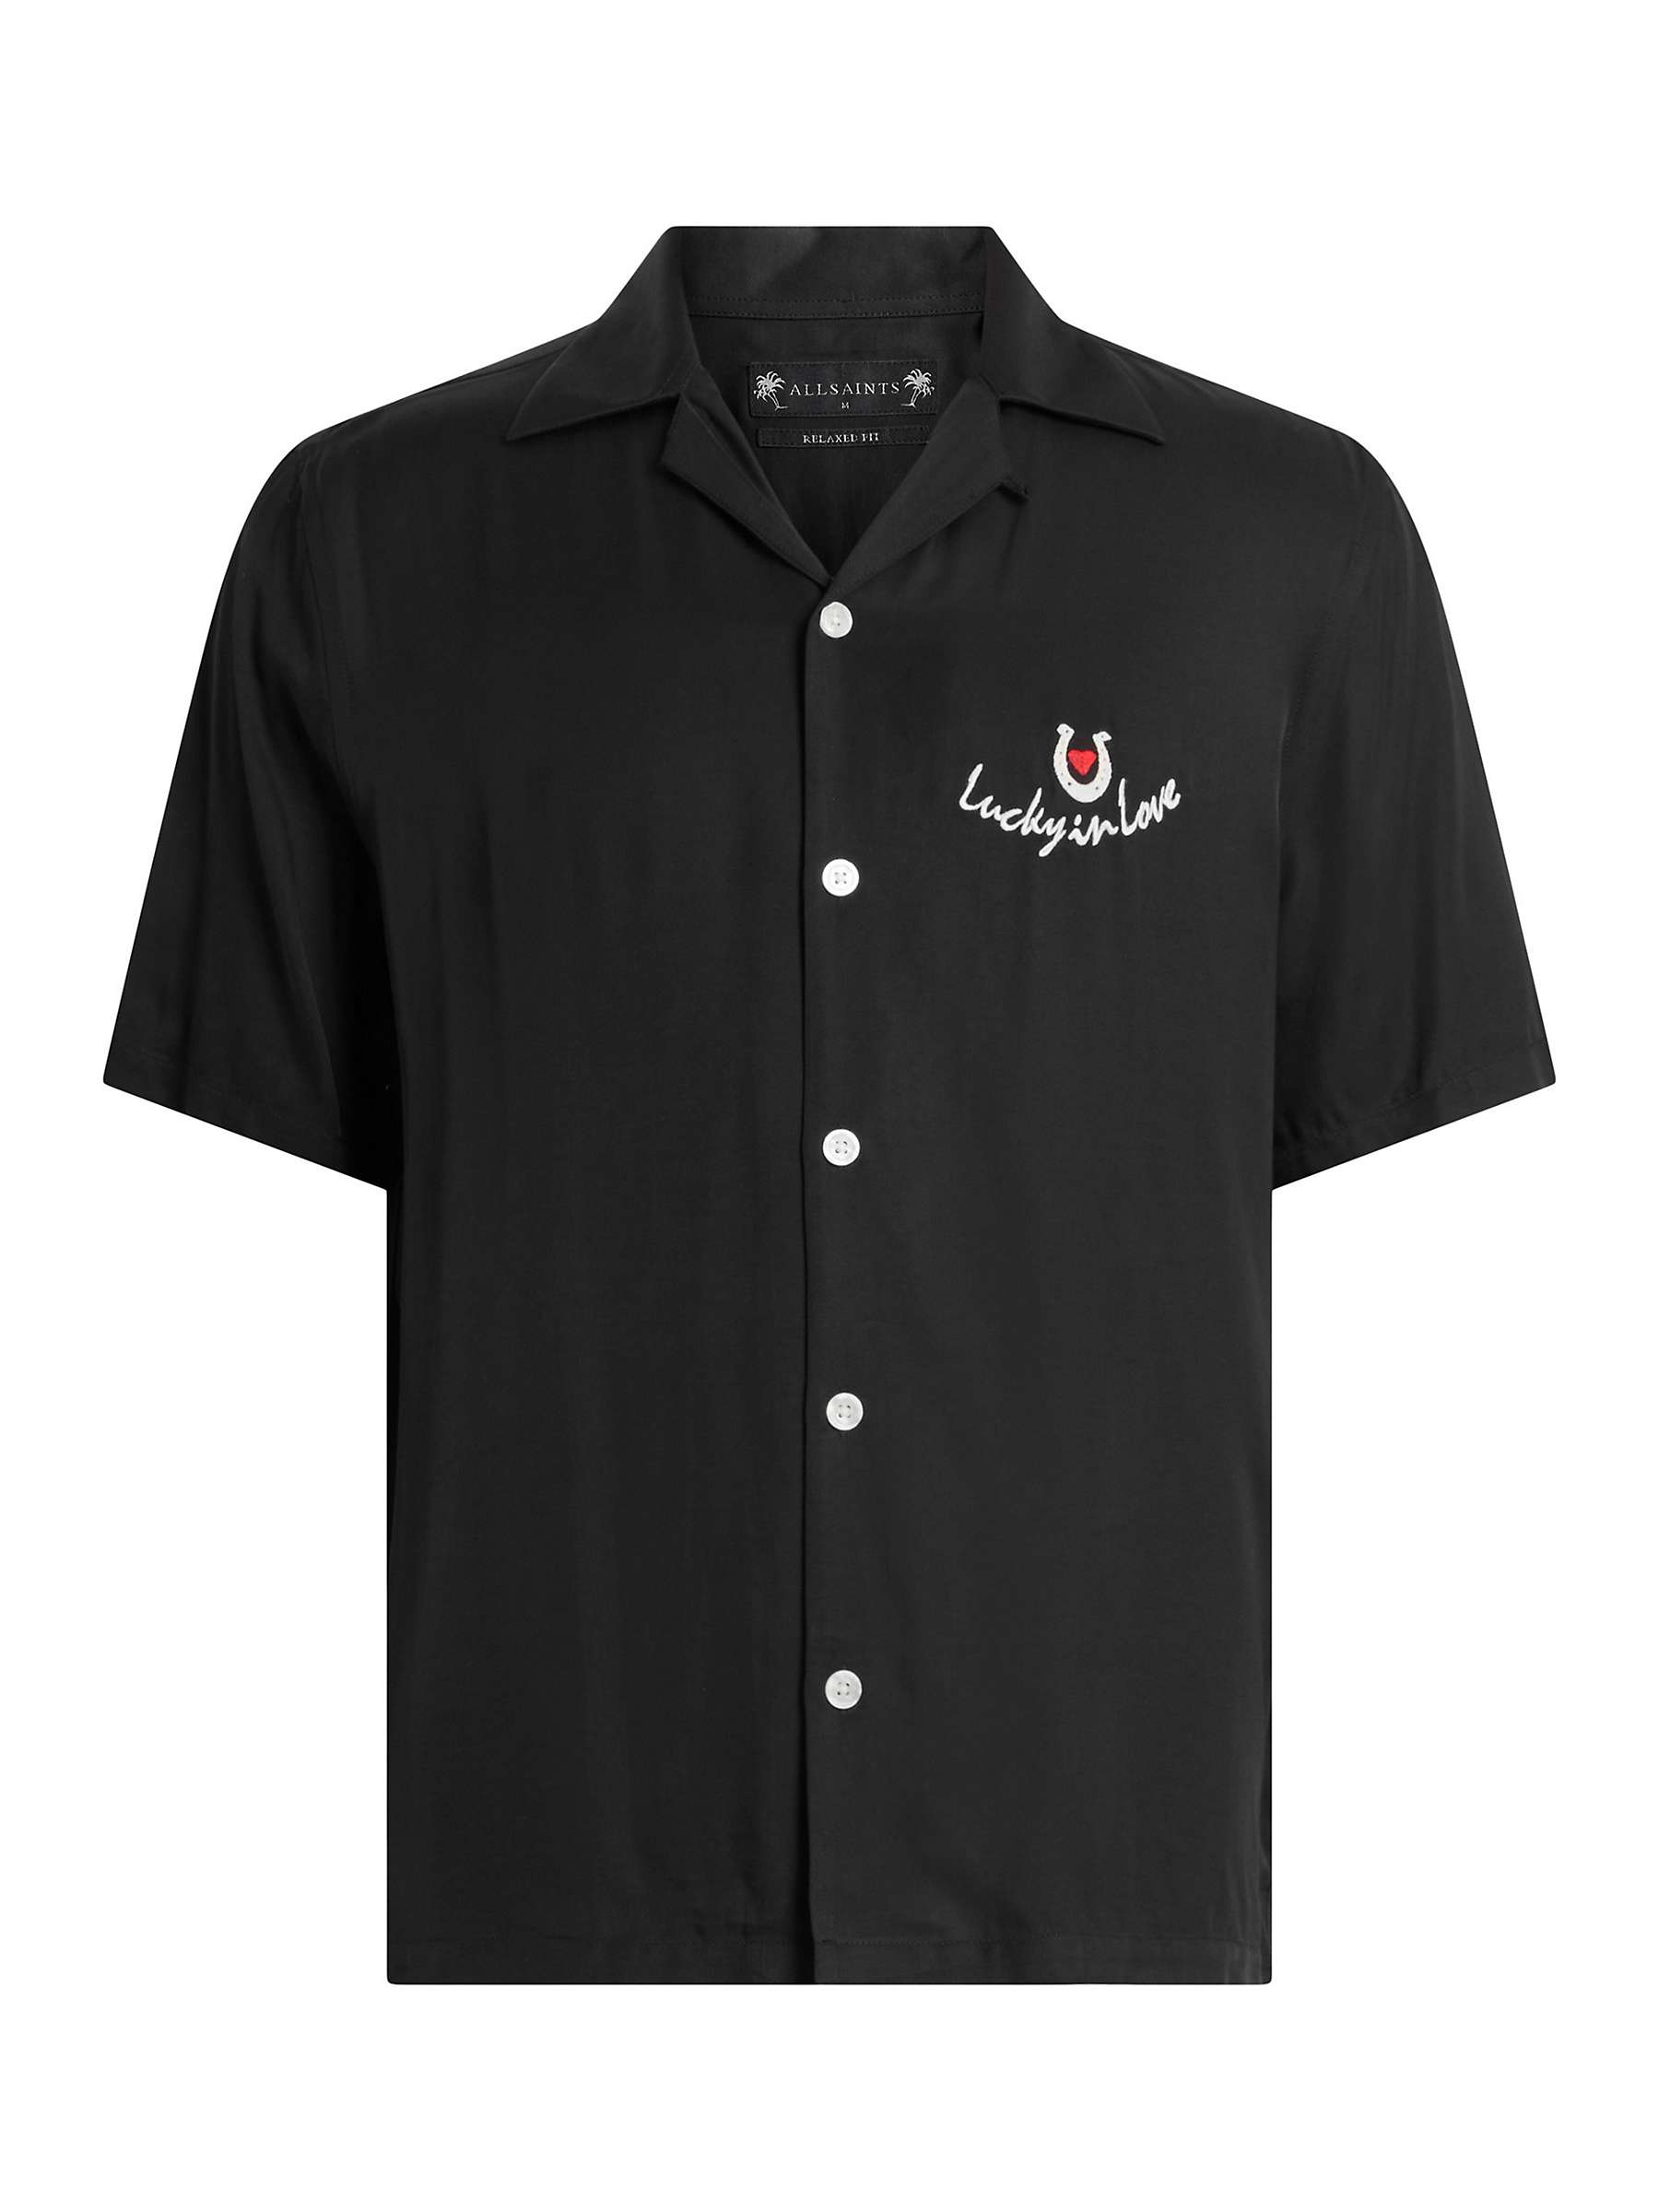 Buy AllSaints Chanceux Short Sleeve Shirt, Jet Black Online at johnlewis.com